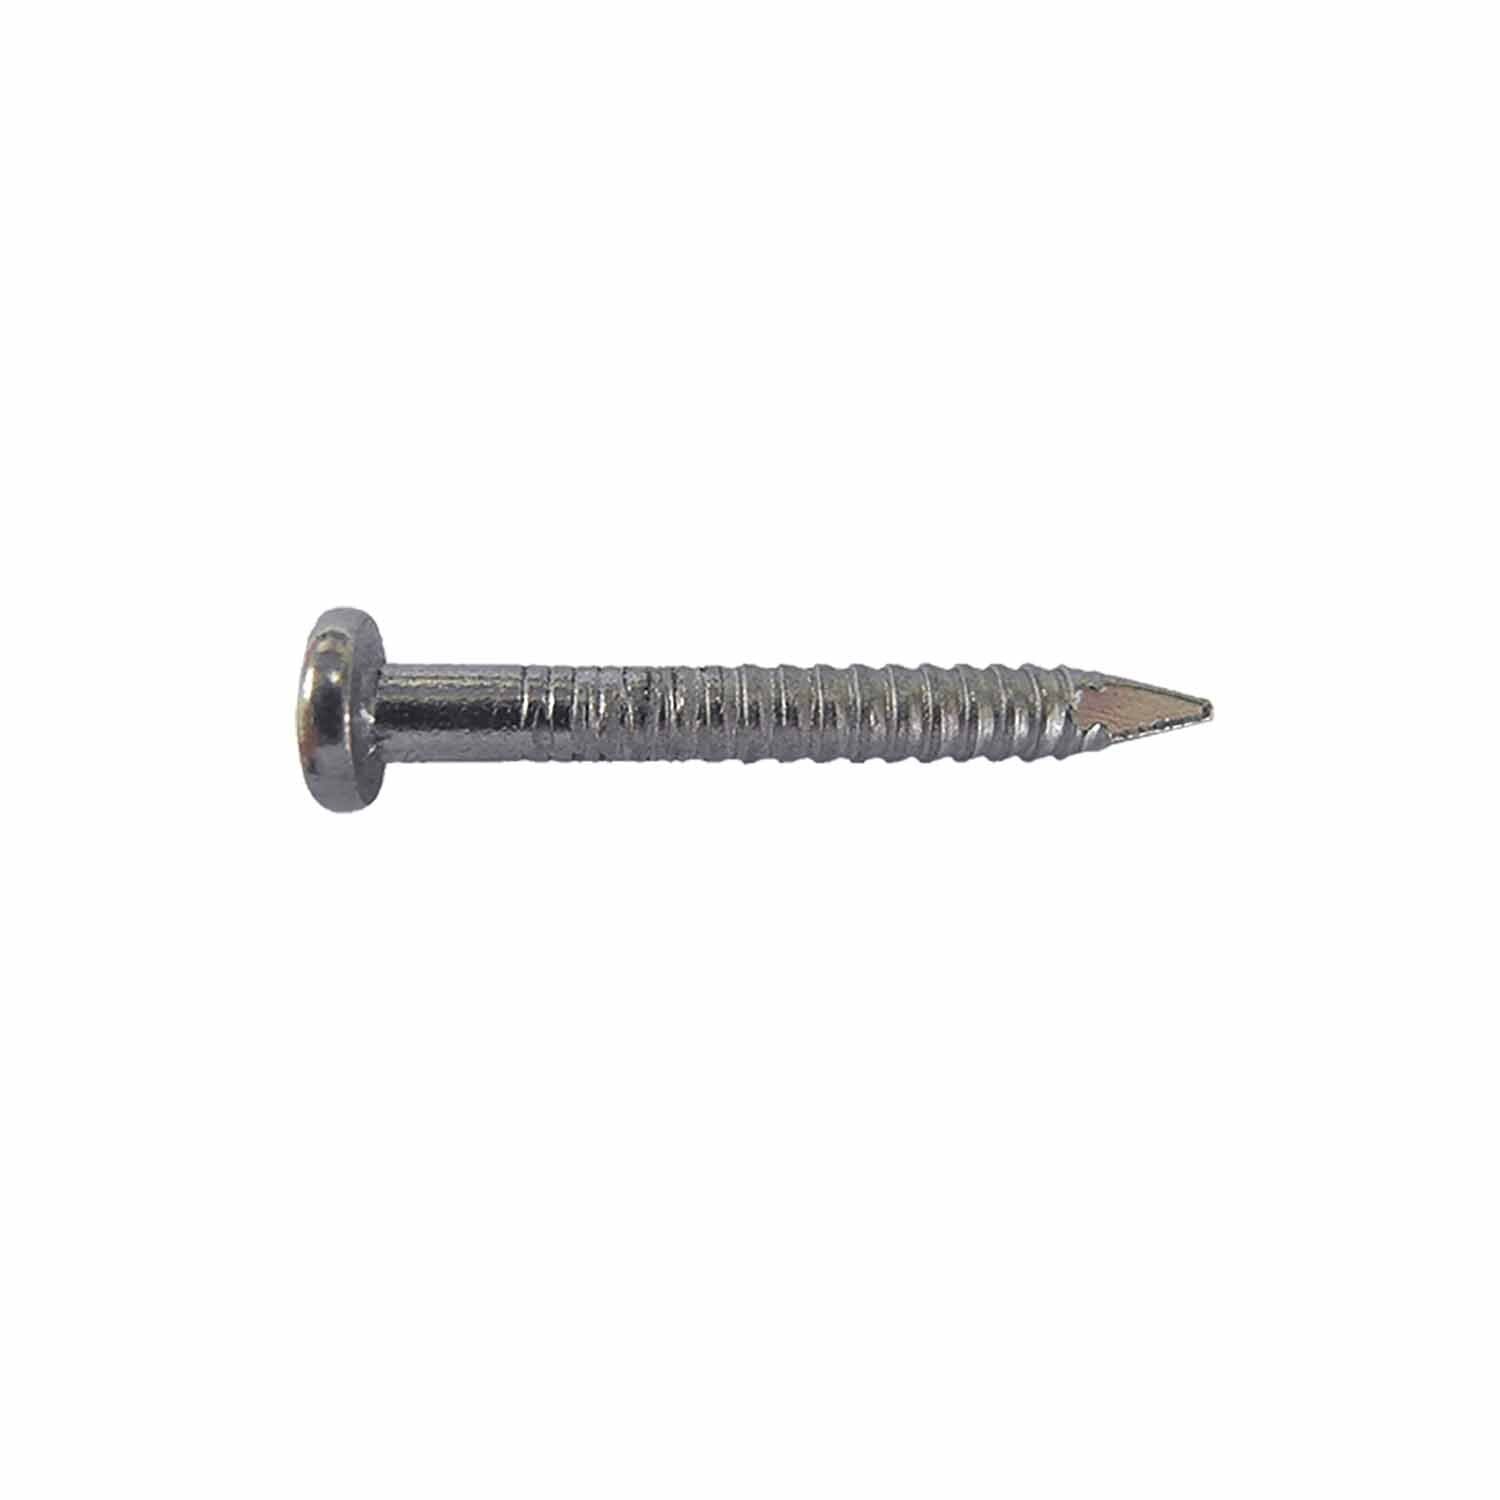 Ecko Bracket Nails 30 x 3.15mm, 5kg 316 Stainless Steel